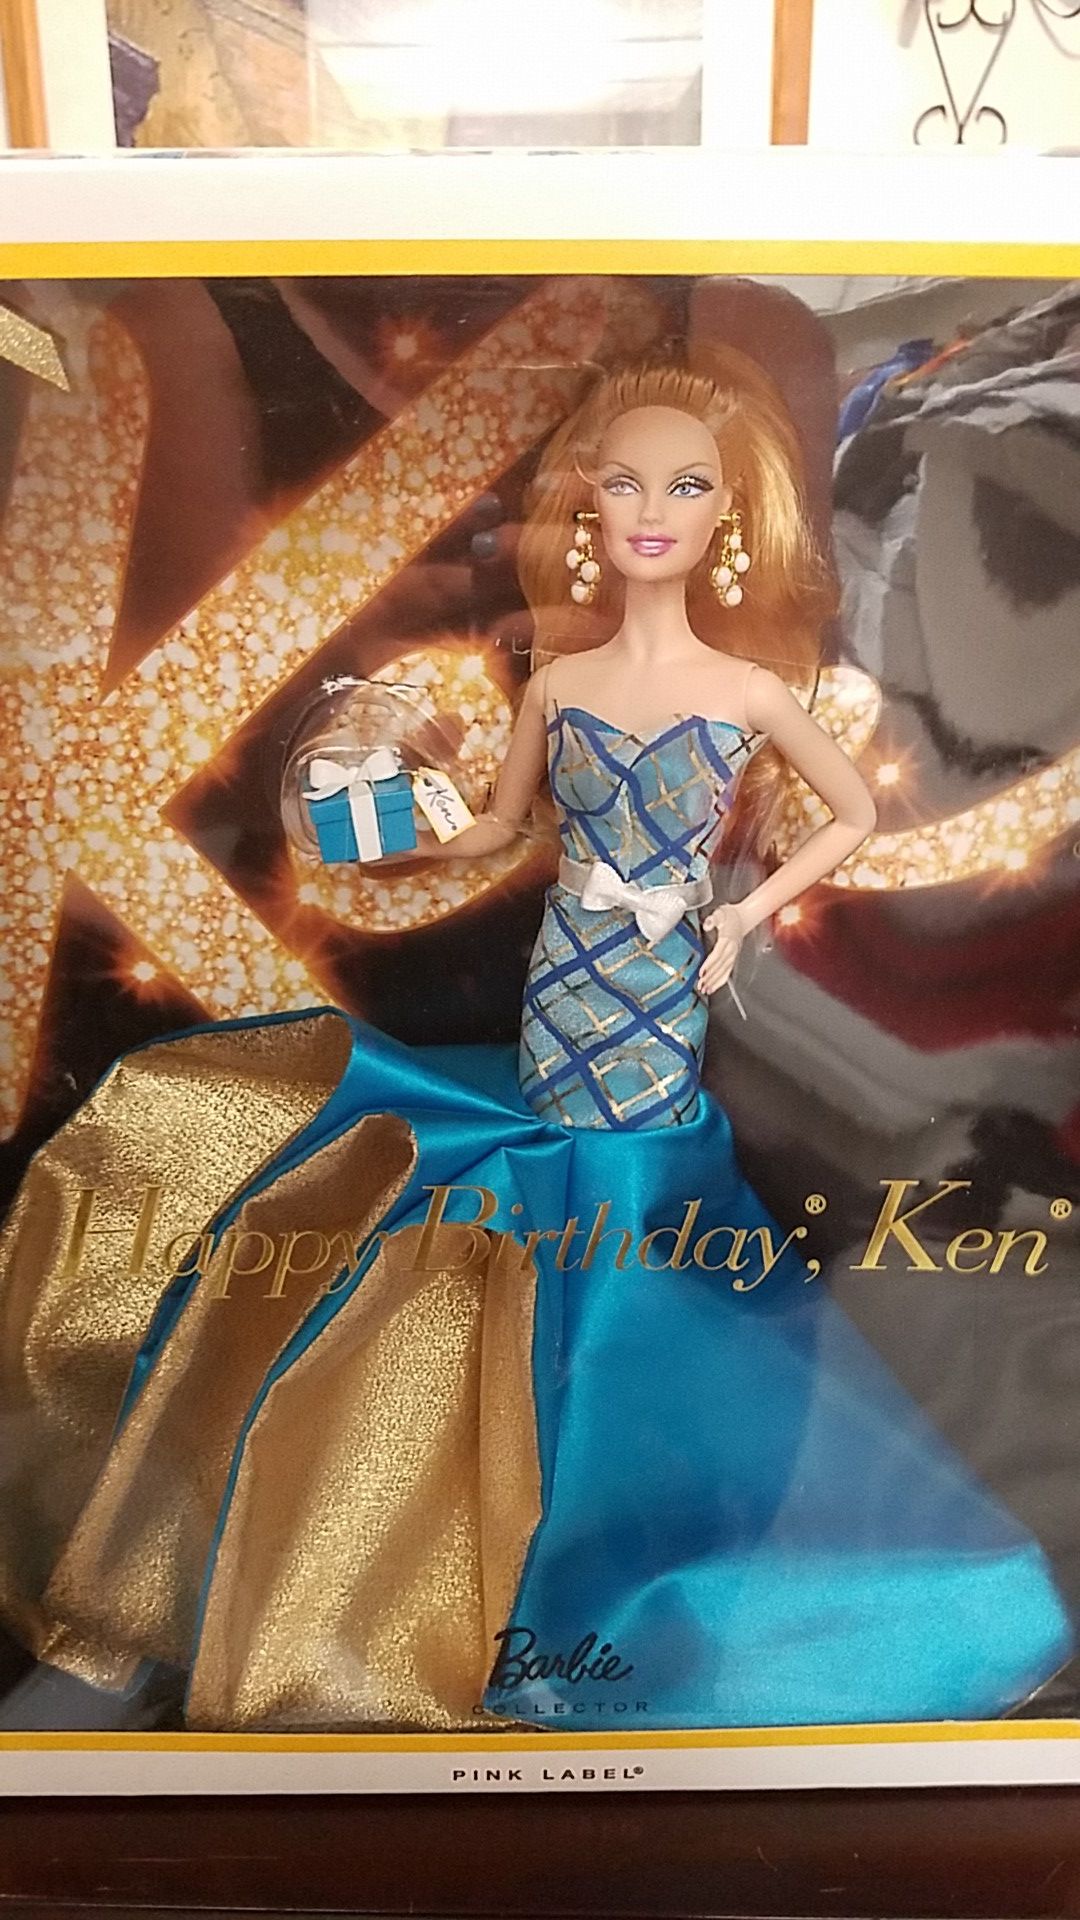 Happy birthday Ken Barbie